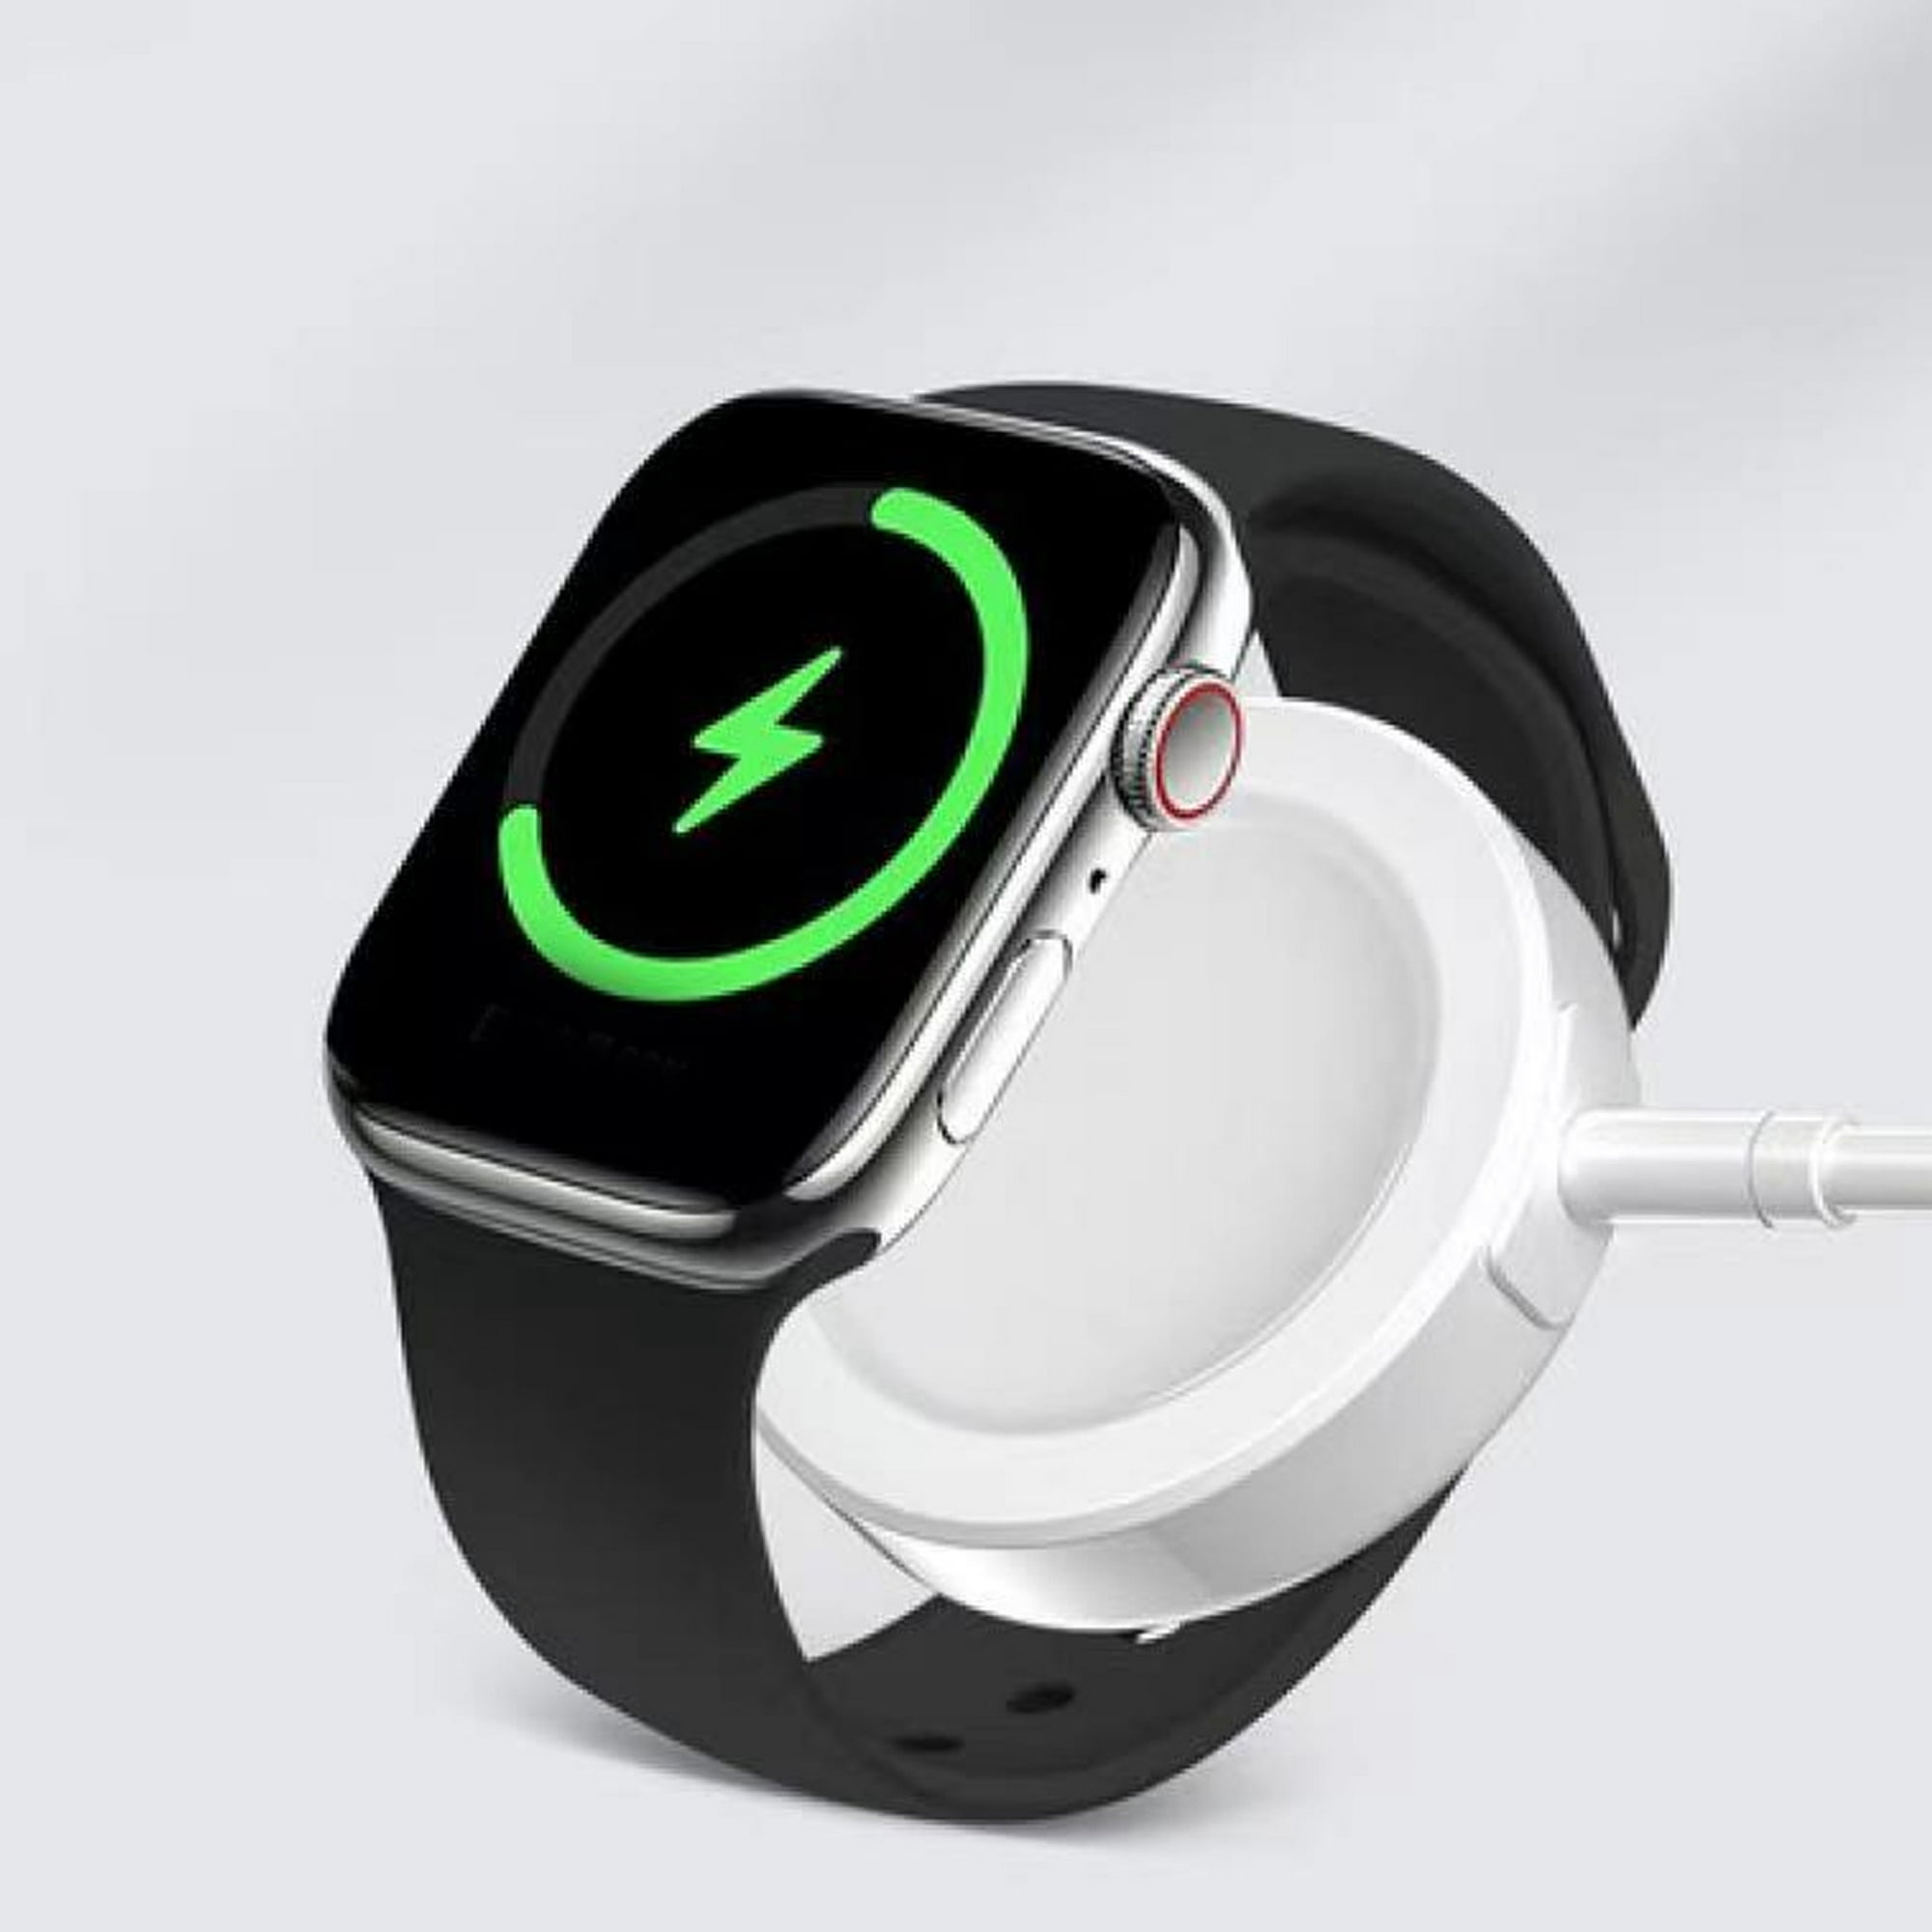 Cargador de reloj inteligente, carga magnética USB de 2.5 W, cable de carga  rápida de reloj, cable de carga de reloj para iOS Watch Series 8, 7, 6, 5